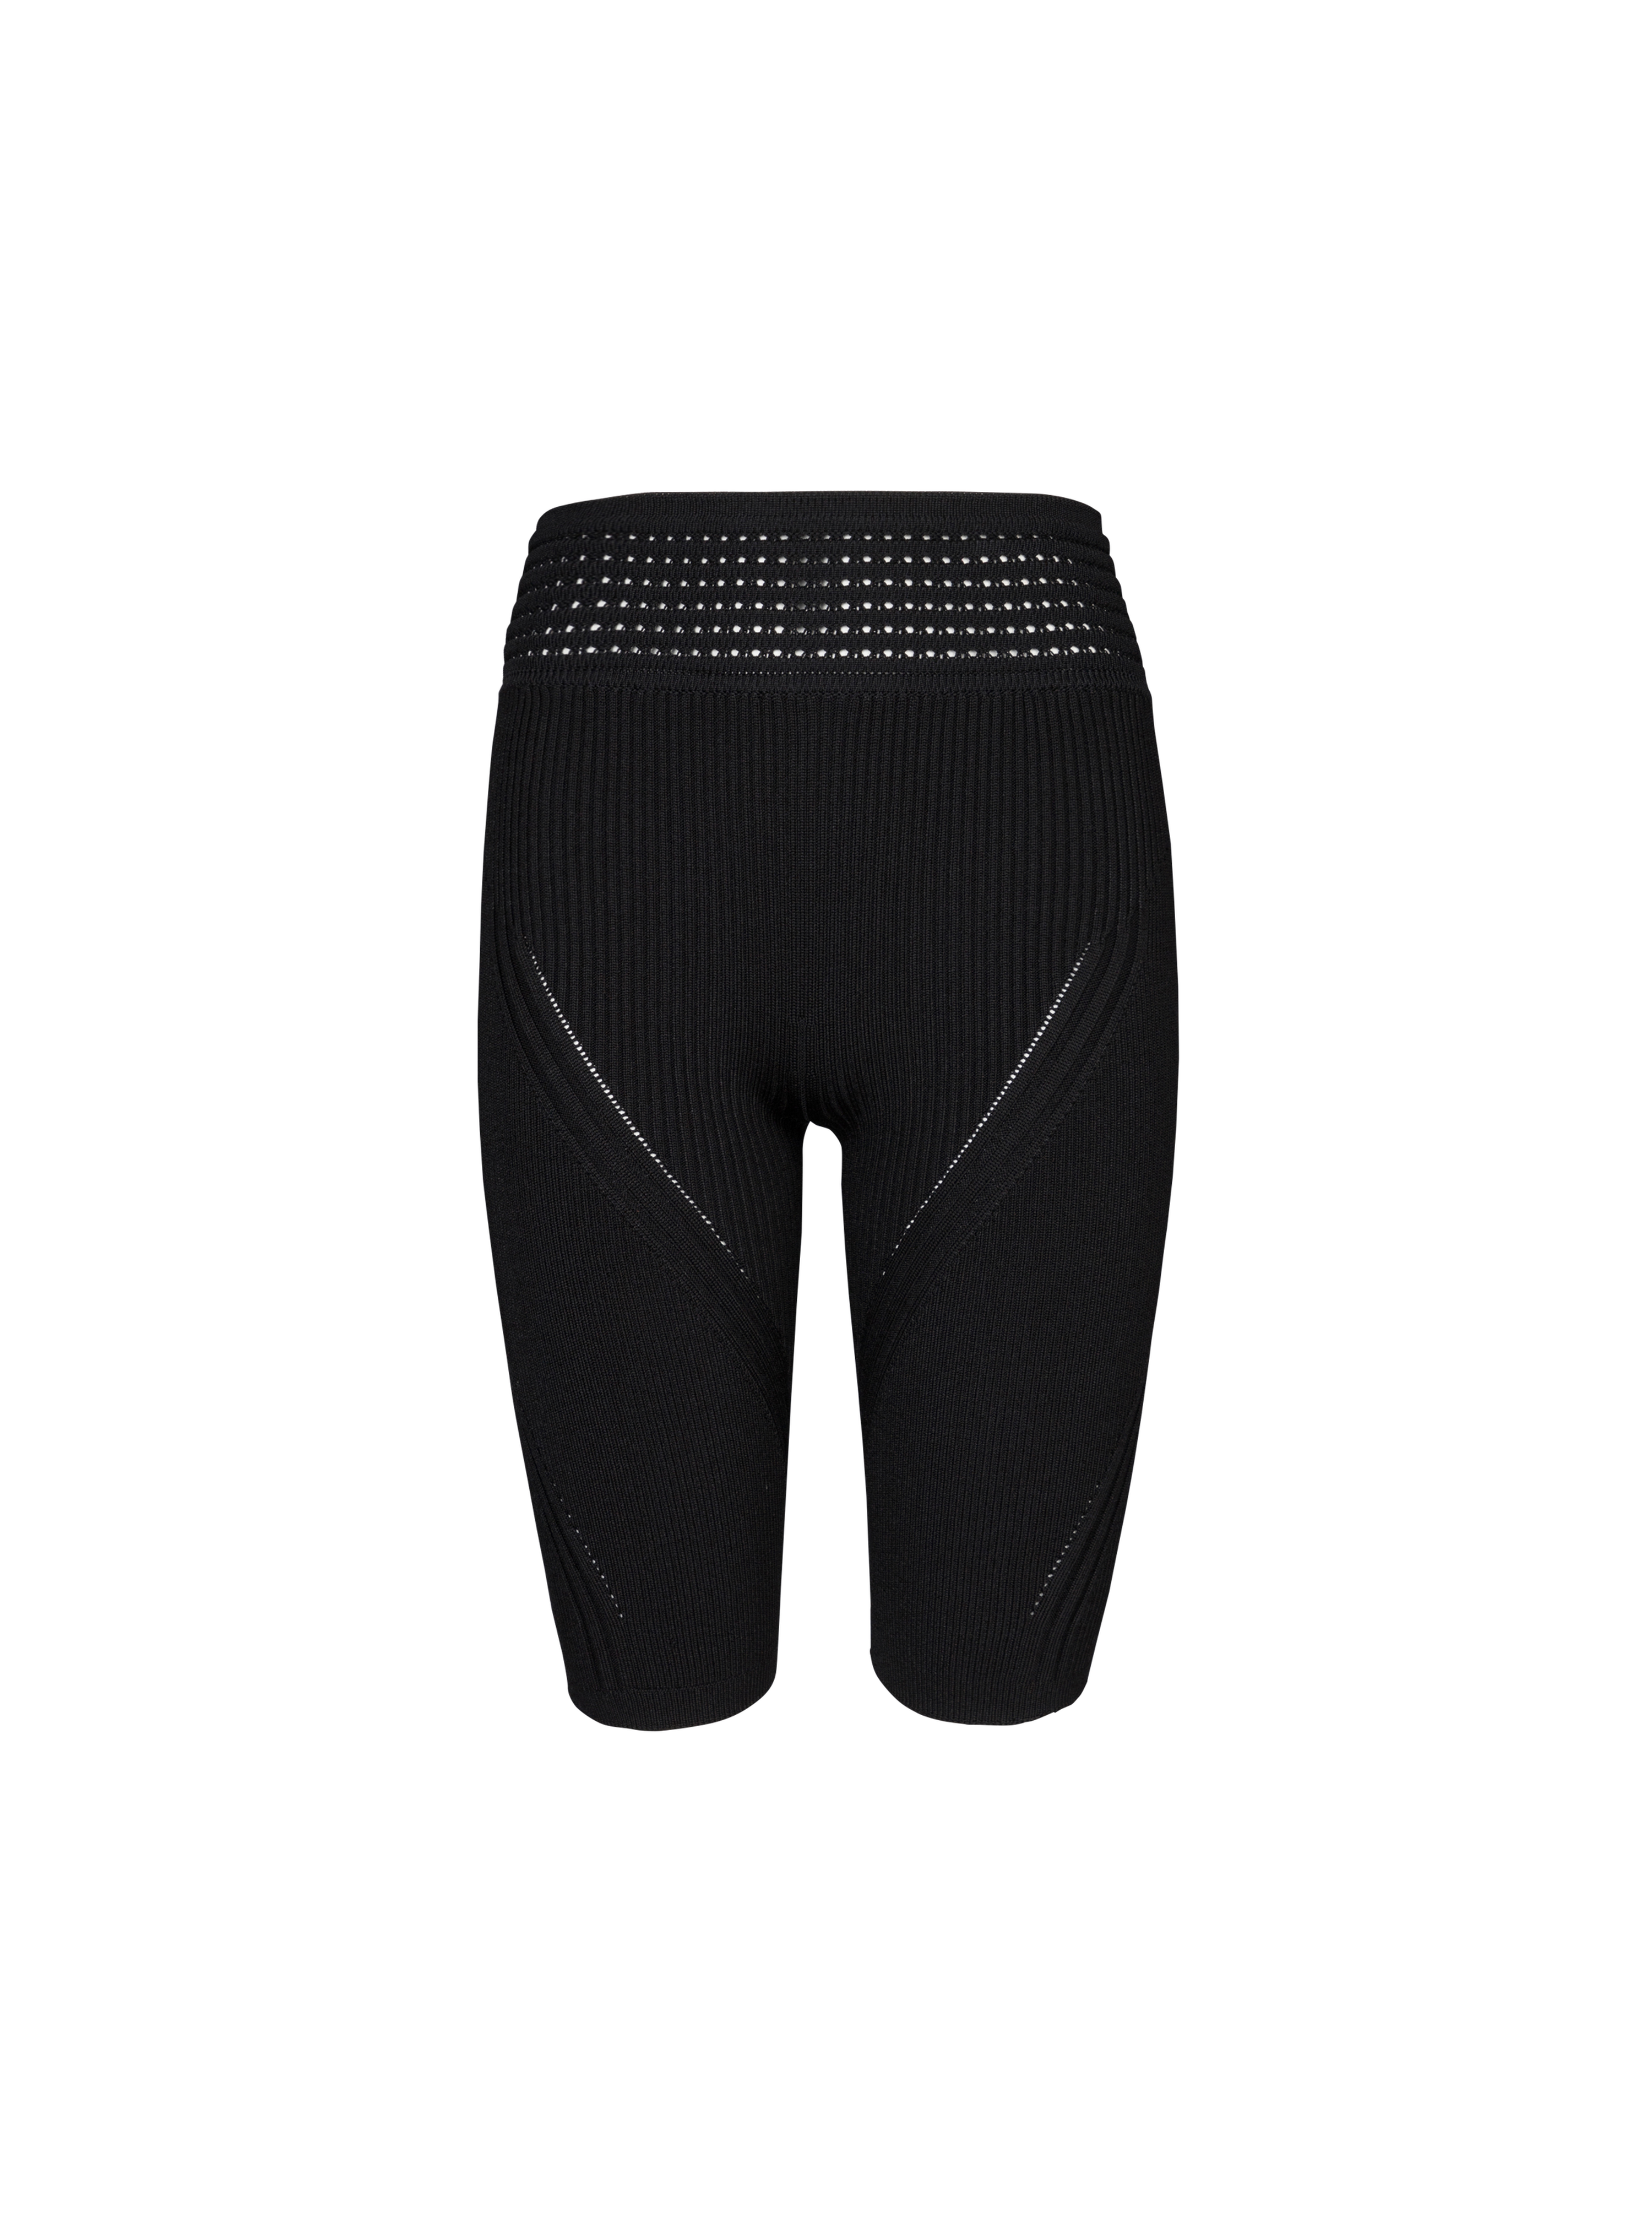 Knit cycling shorts, black